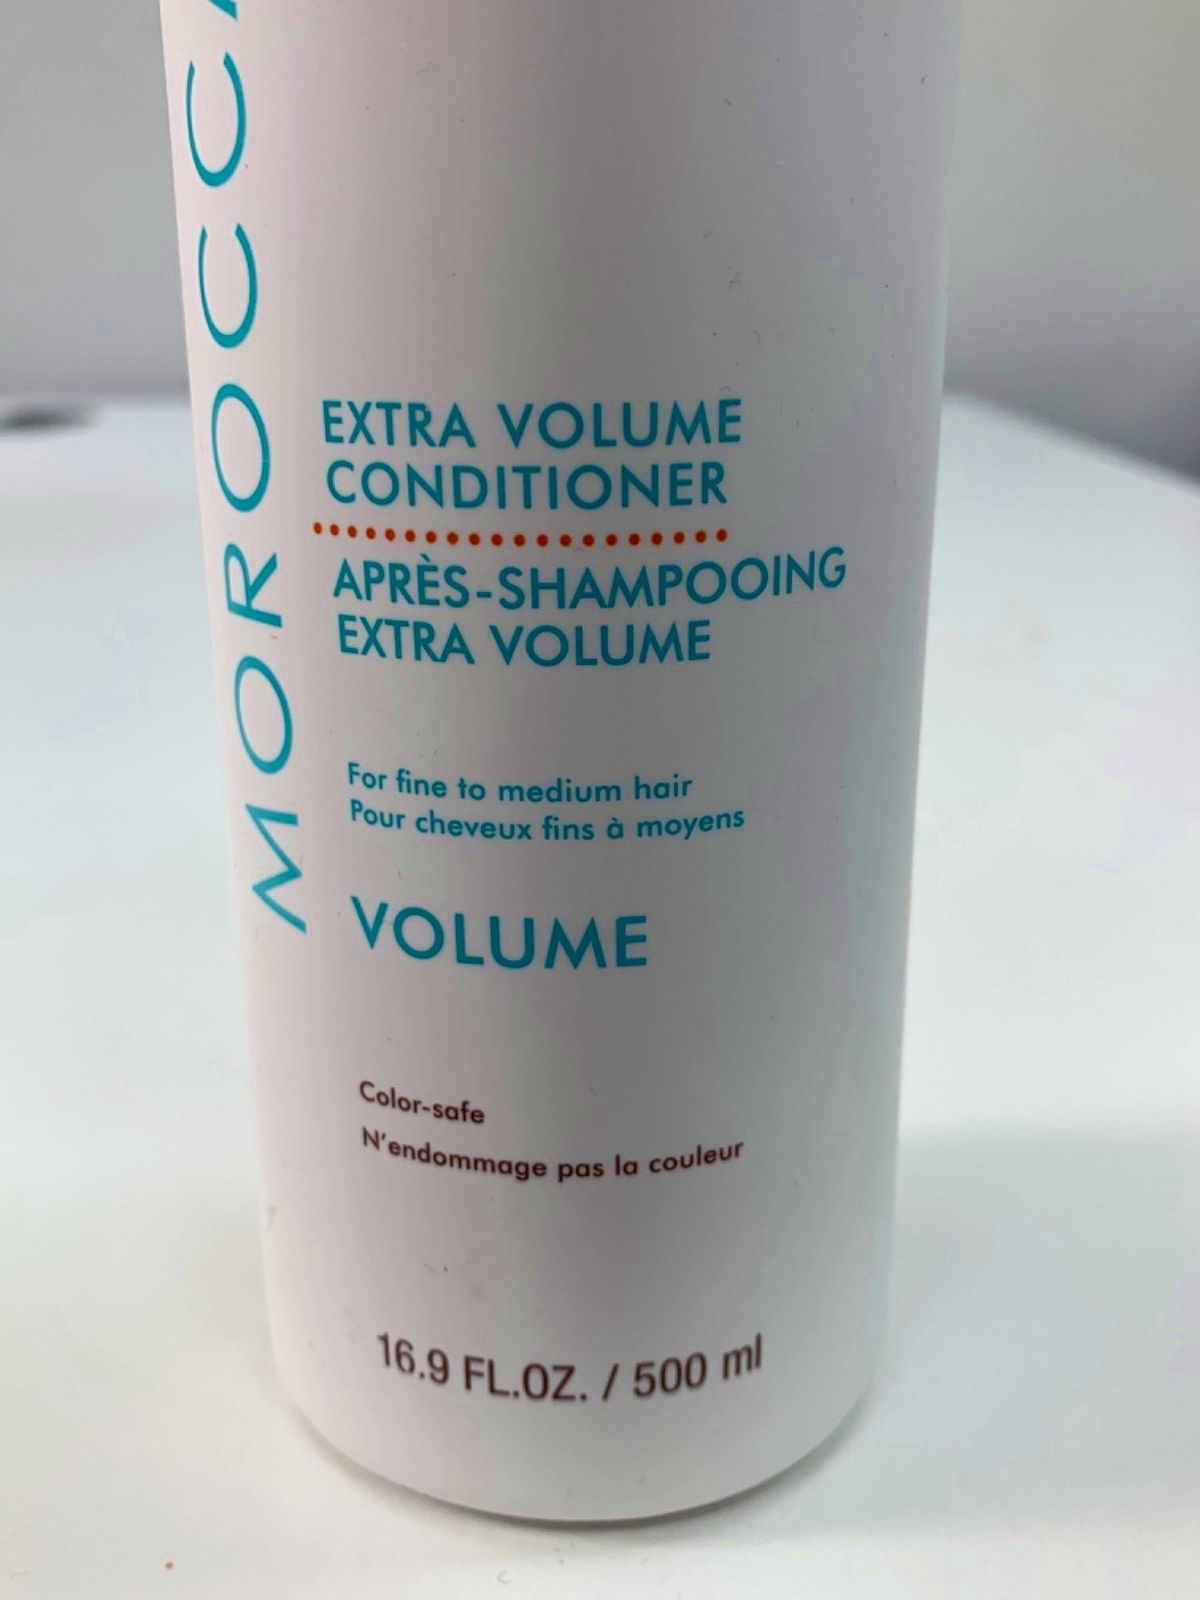 Moroccanoil Extra Volume Conditioner Large size 500ml